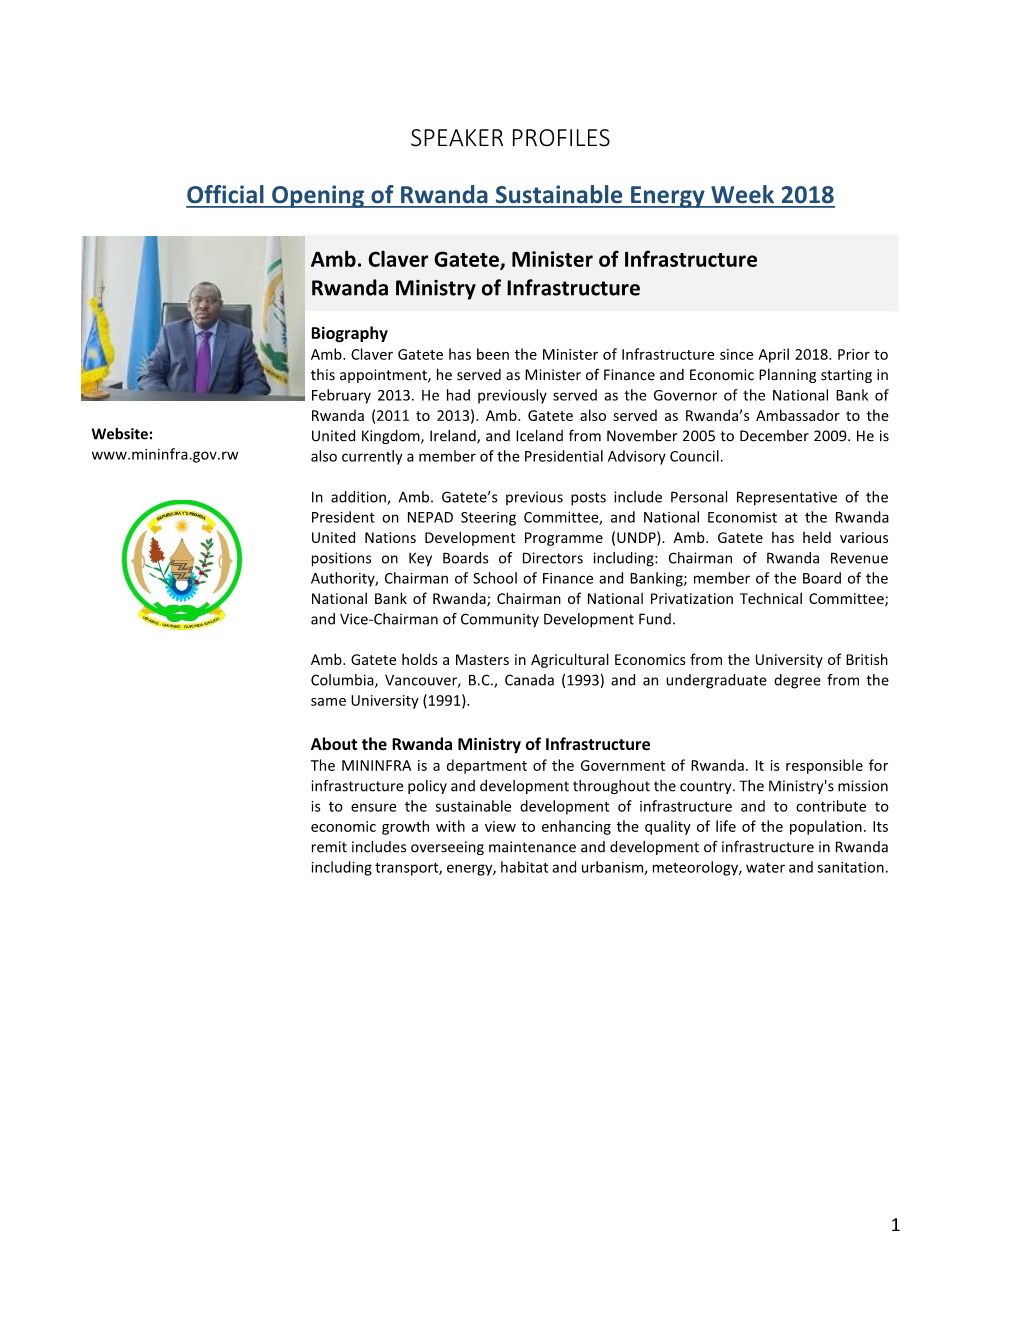 SPEAKER PROFILES Official Opening of Rwanda Sustainable Energy